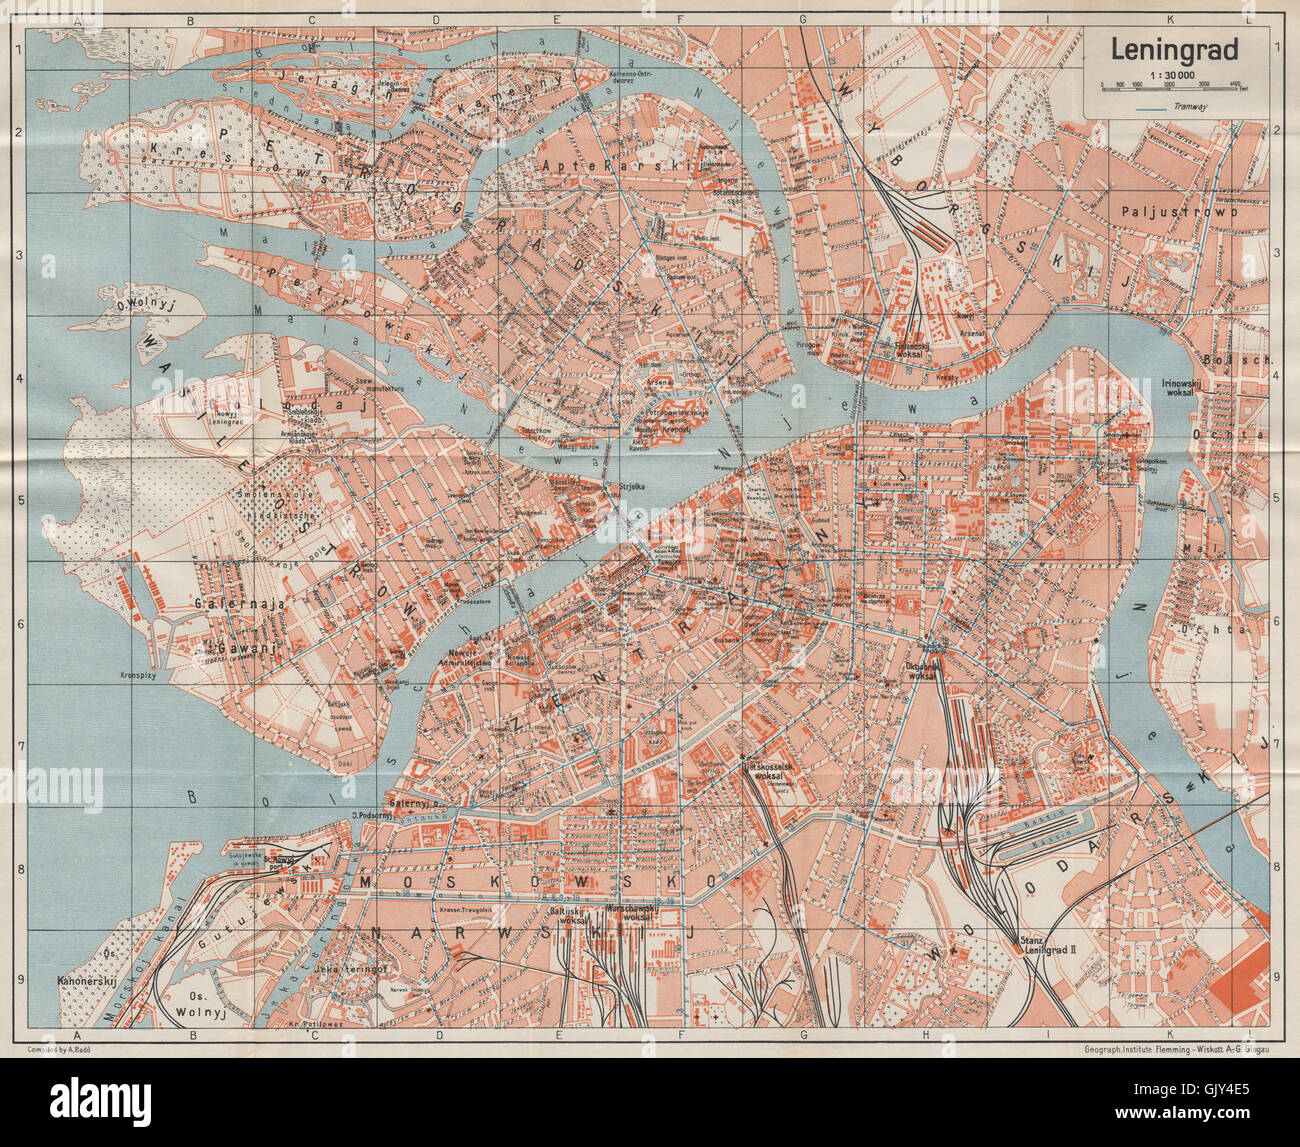 LENINGRAD vintage city plan. Soviet Union/USSR. St Petersburg. Russia, 1929 map Stock Photo